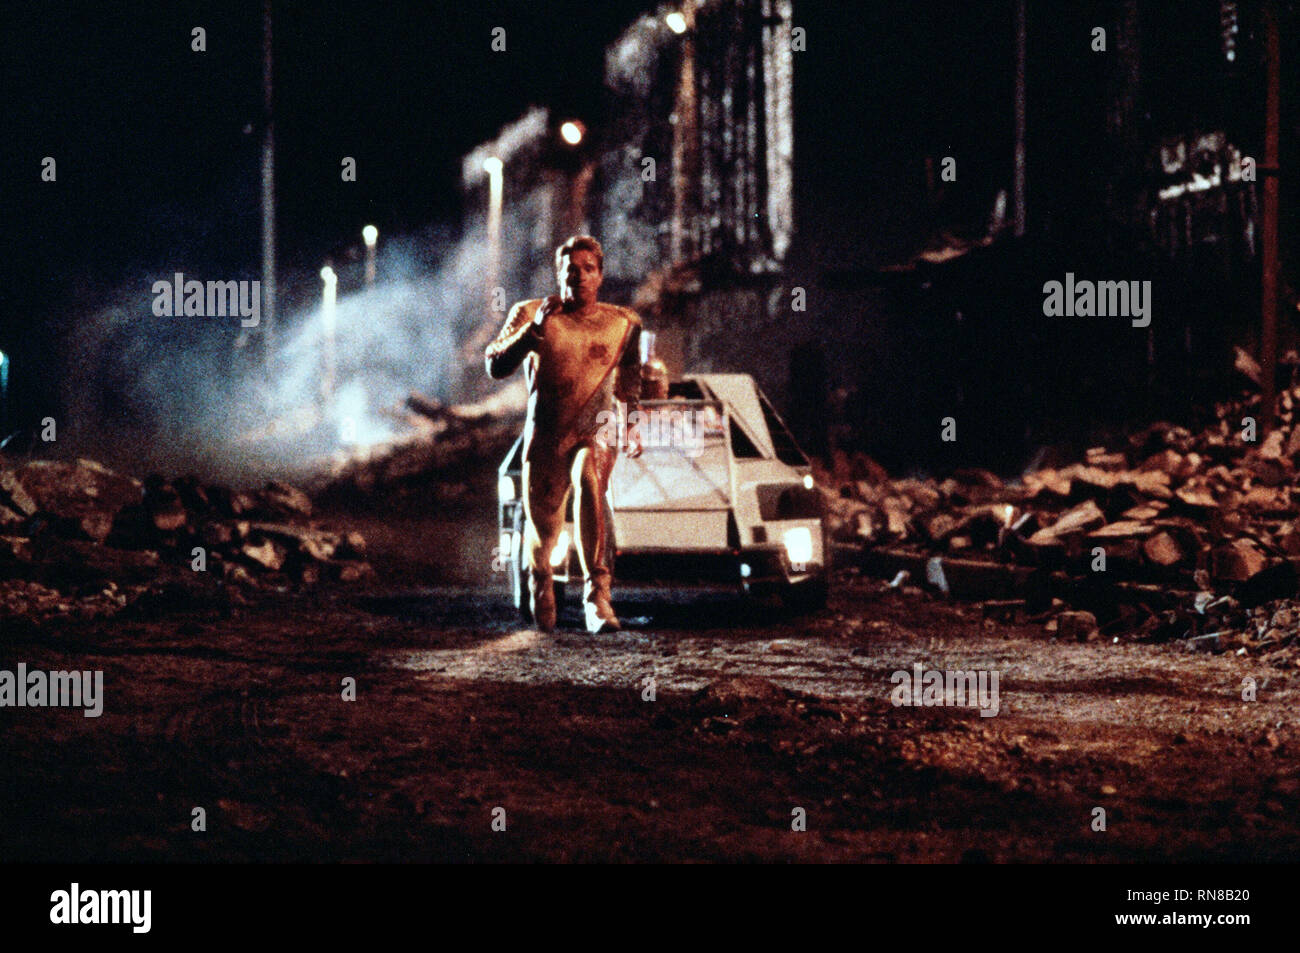 ARNOLD SCHWARZENEGGER, THE RUNNING MAN, 1987 Stock Photo - Alamy